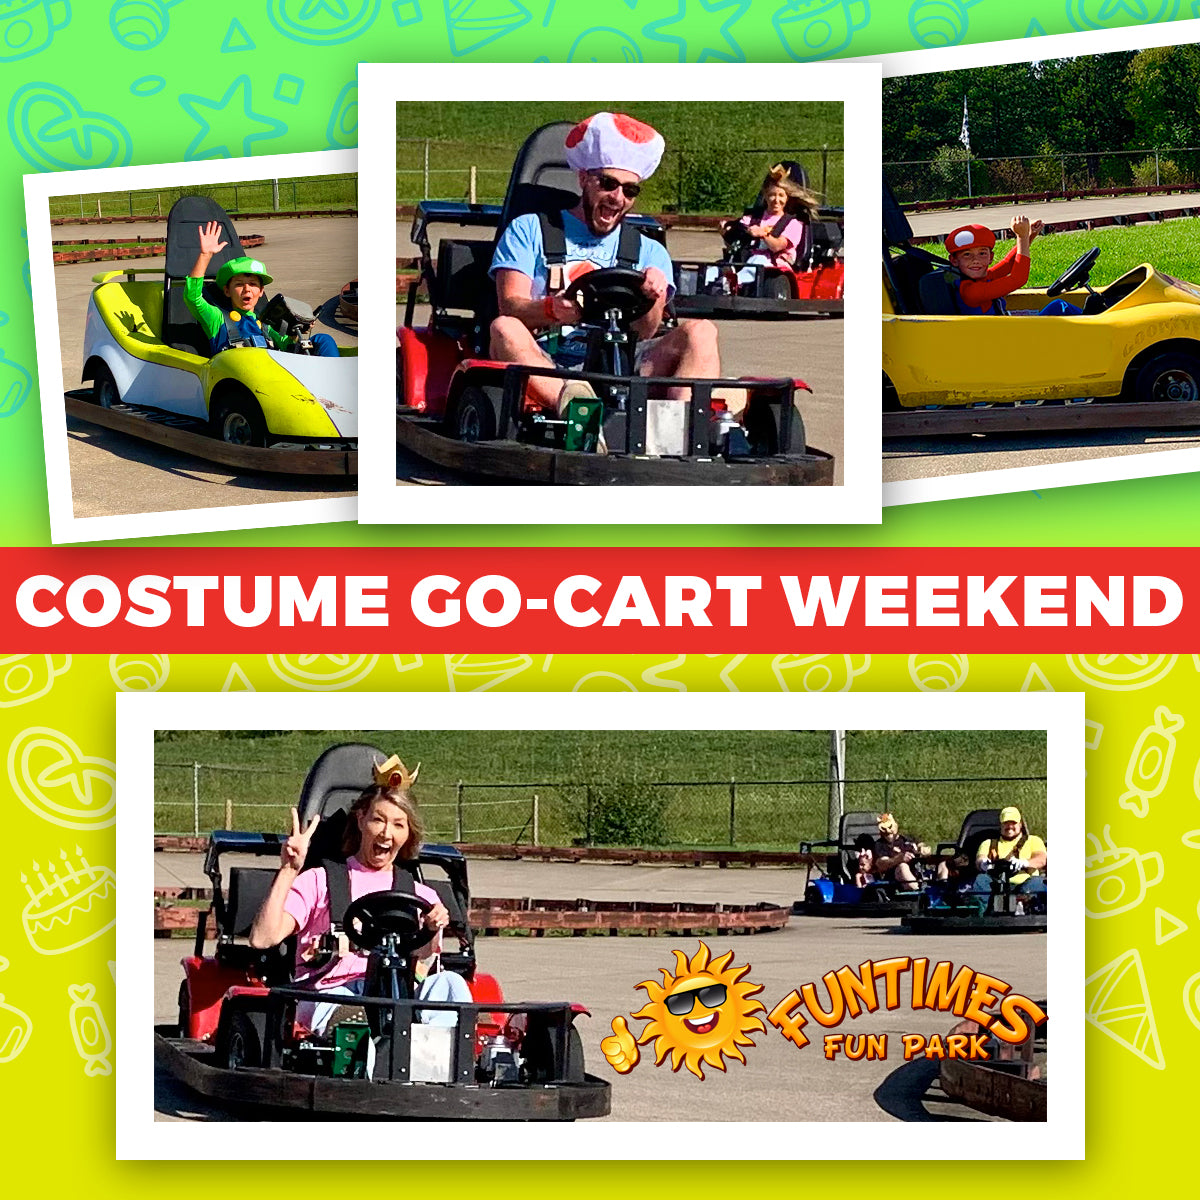 Costume Go-Cart Weekend